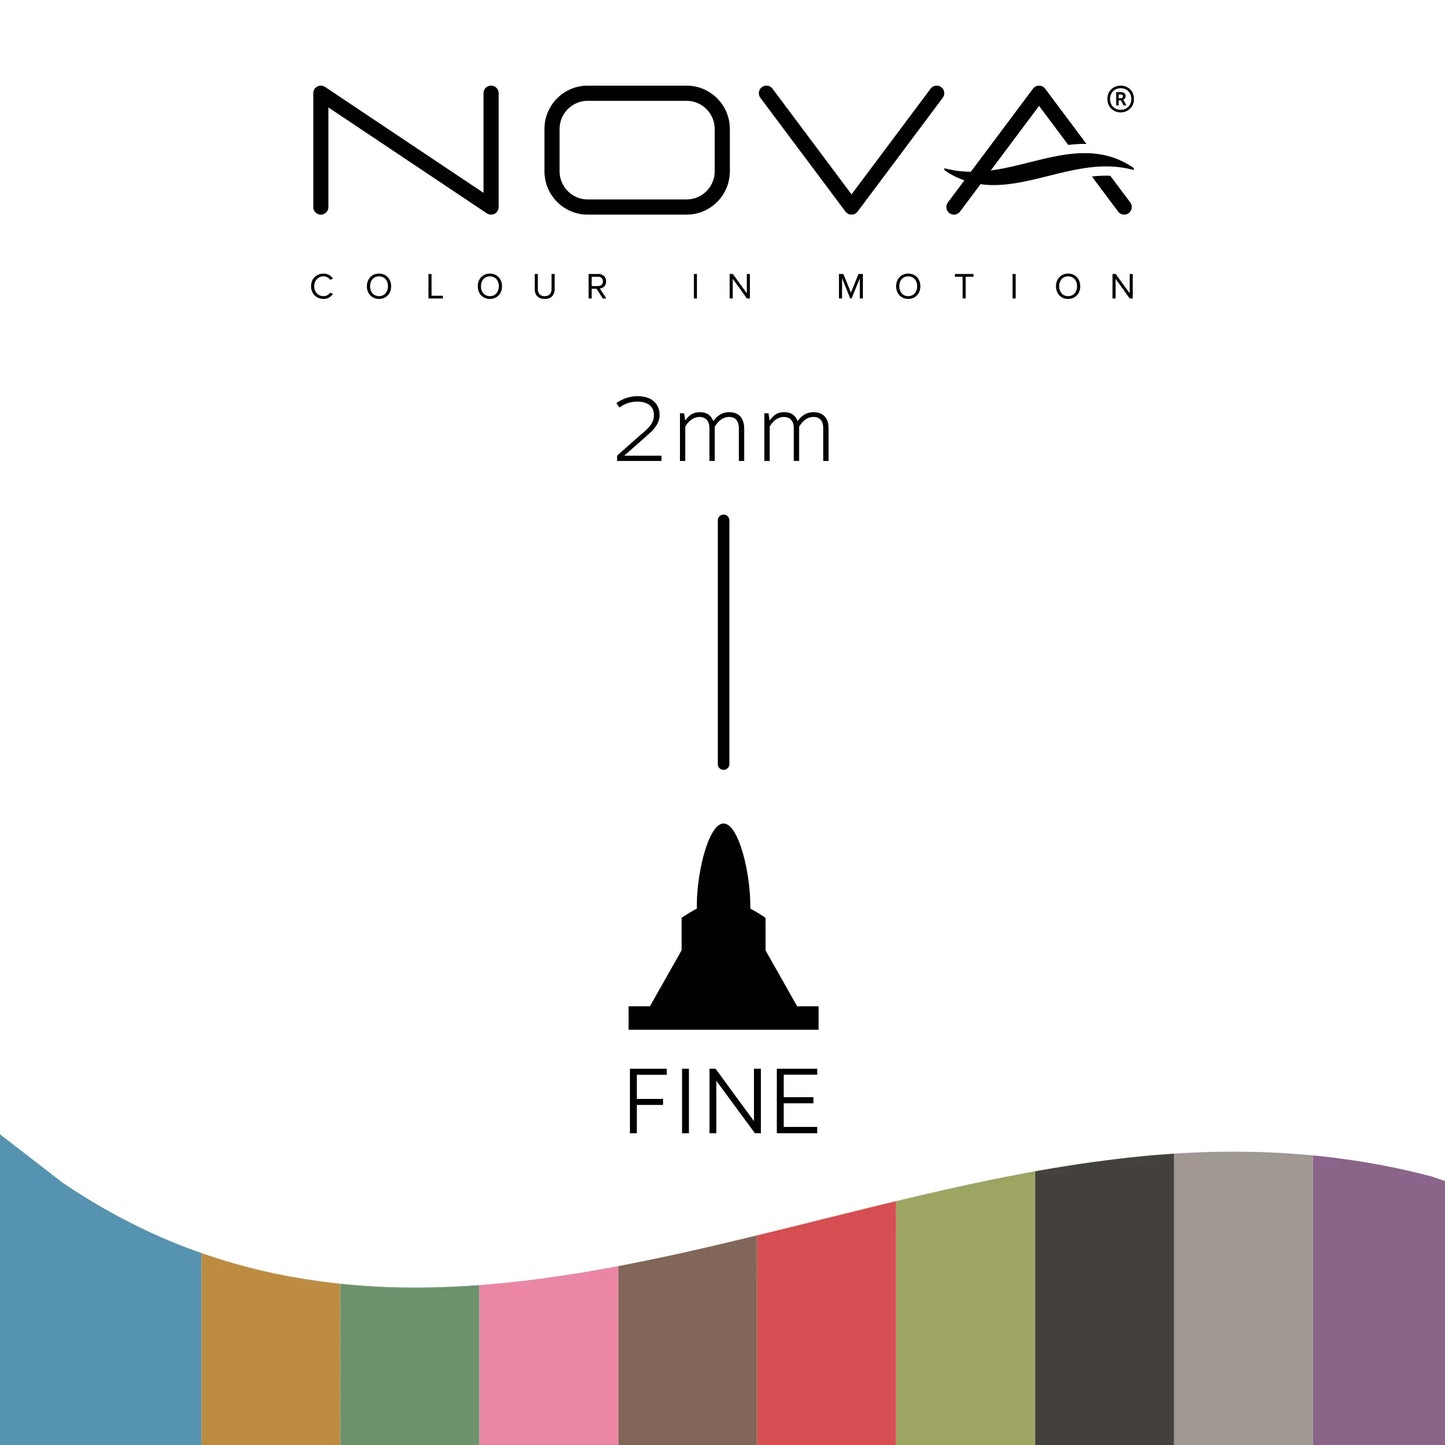 10 Metallic Markers | NOVA | 2mm Fine - SweetpeaStore